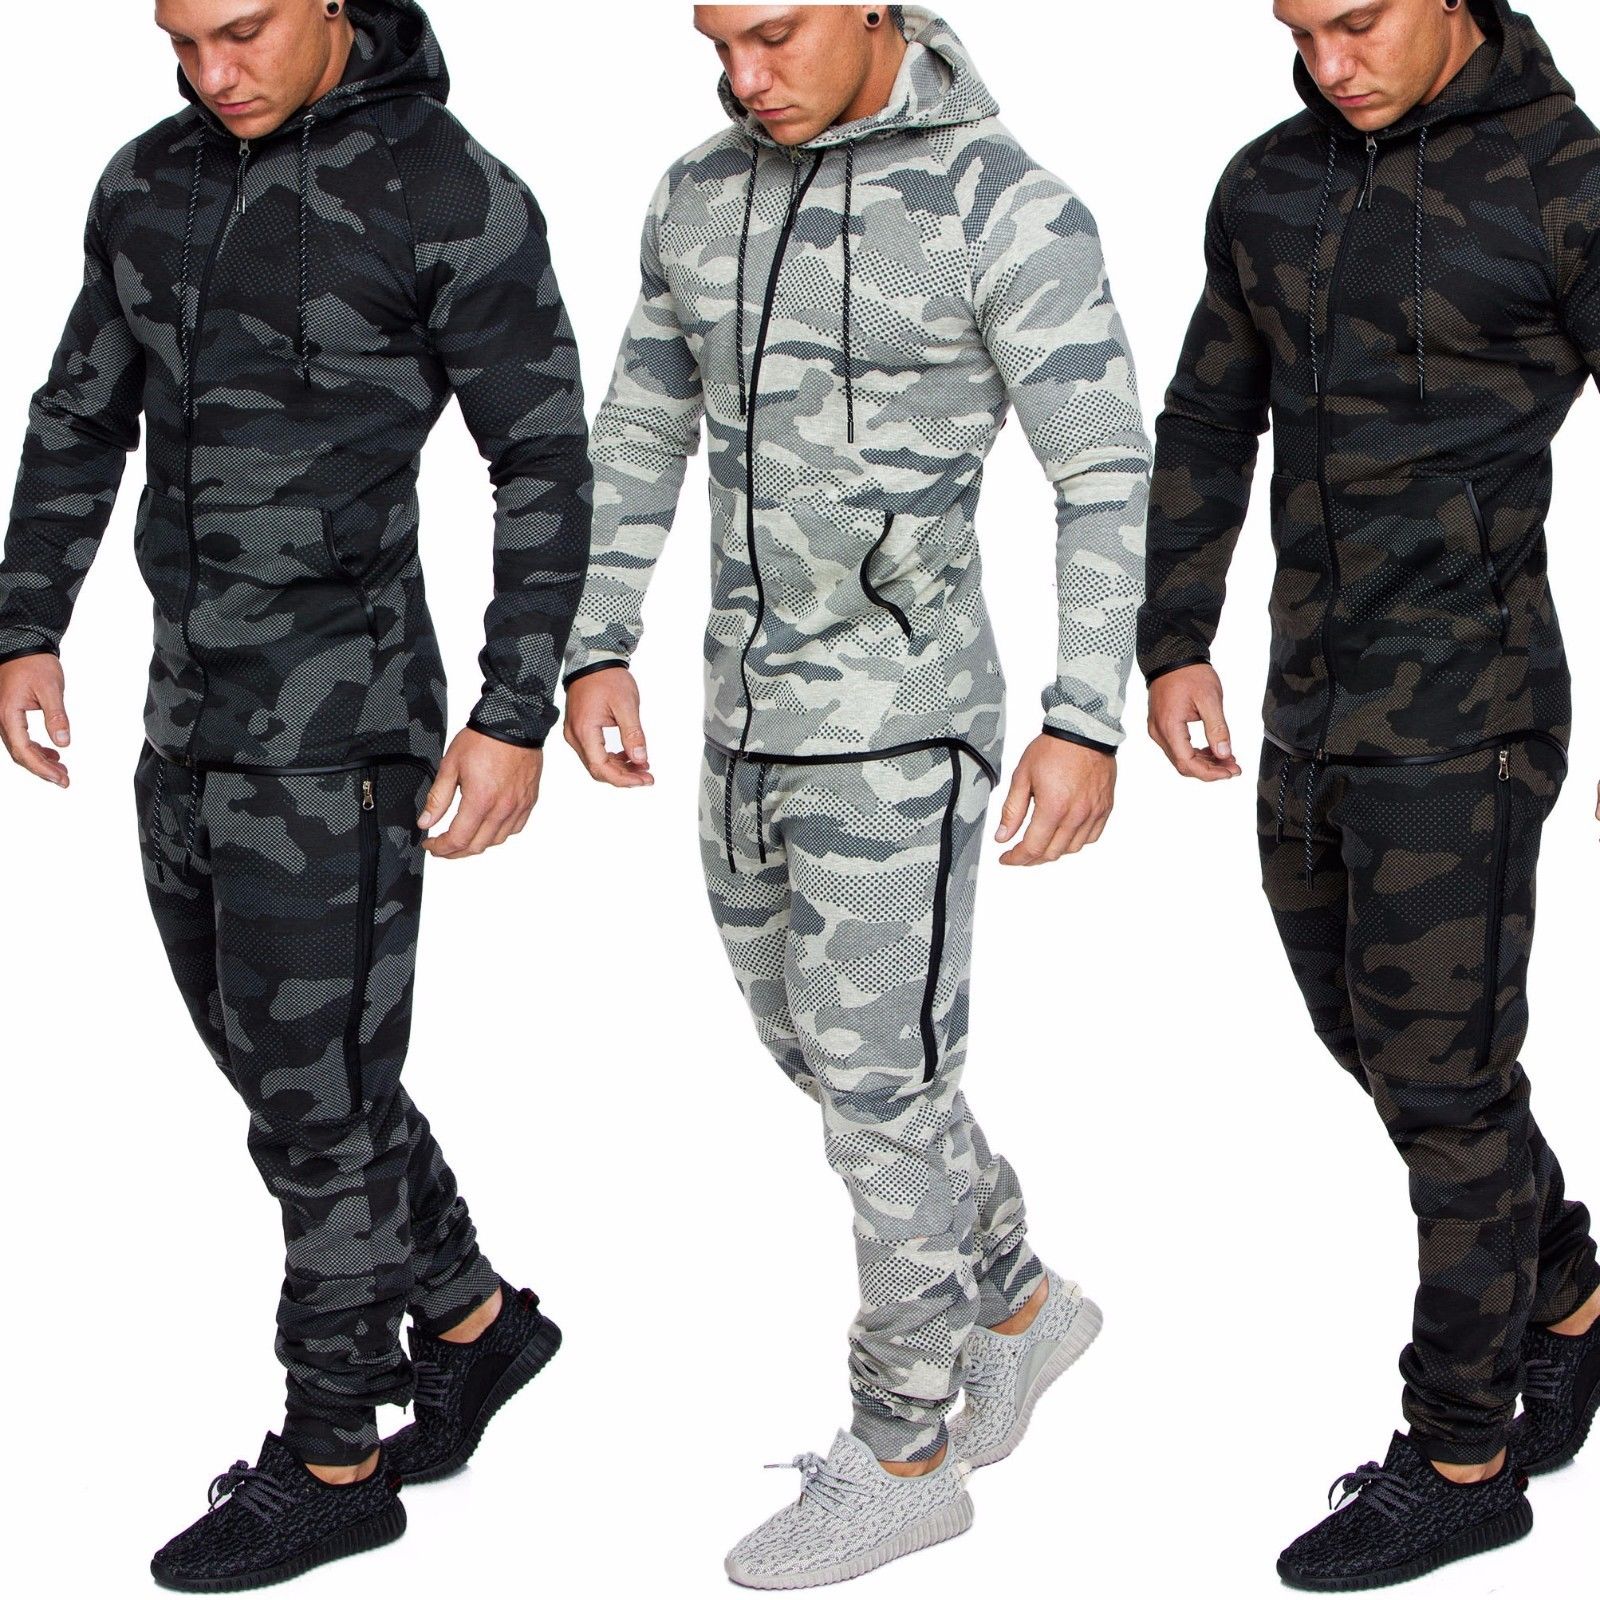 Herren Camouflage Sportanzug Jogginganzug Trainingsanzug Sporthose+Jacke 1008